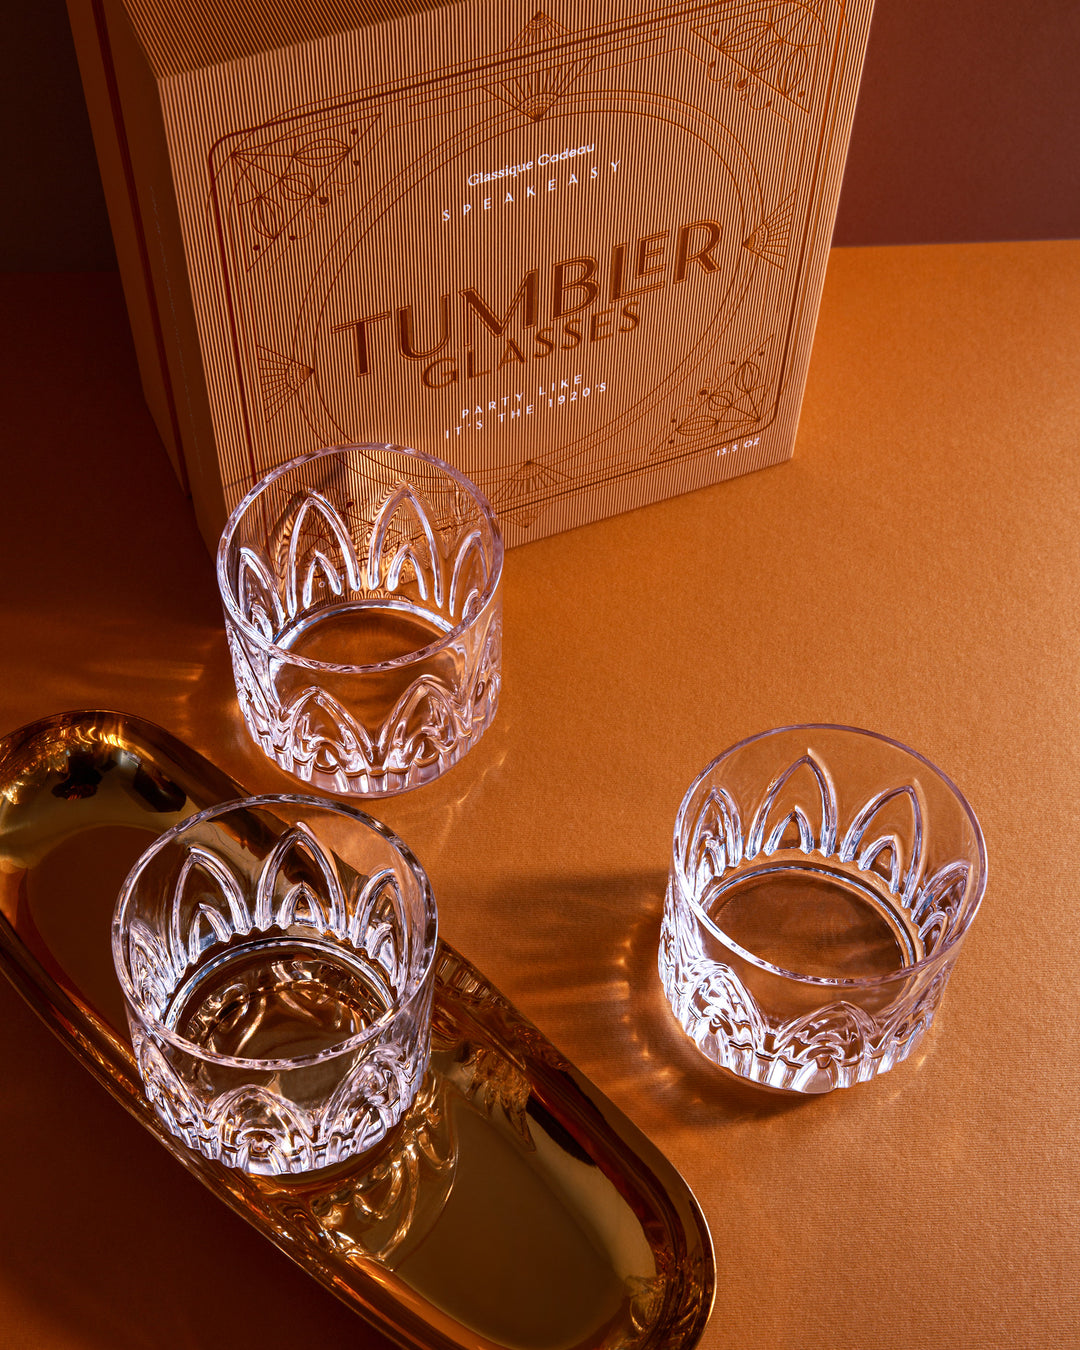 Vintage Art Deco Short Tumbler Cocktail Glasses | Set of 4 | 11 oz